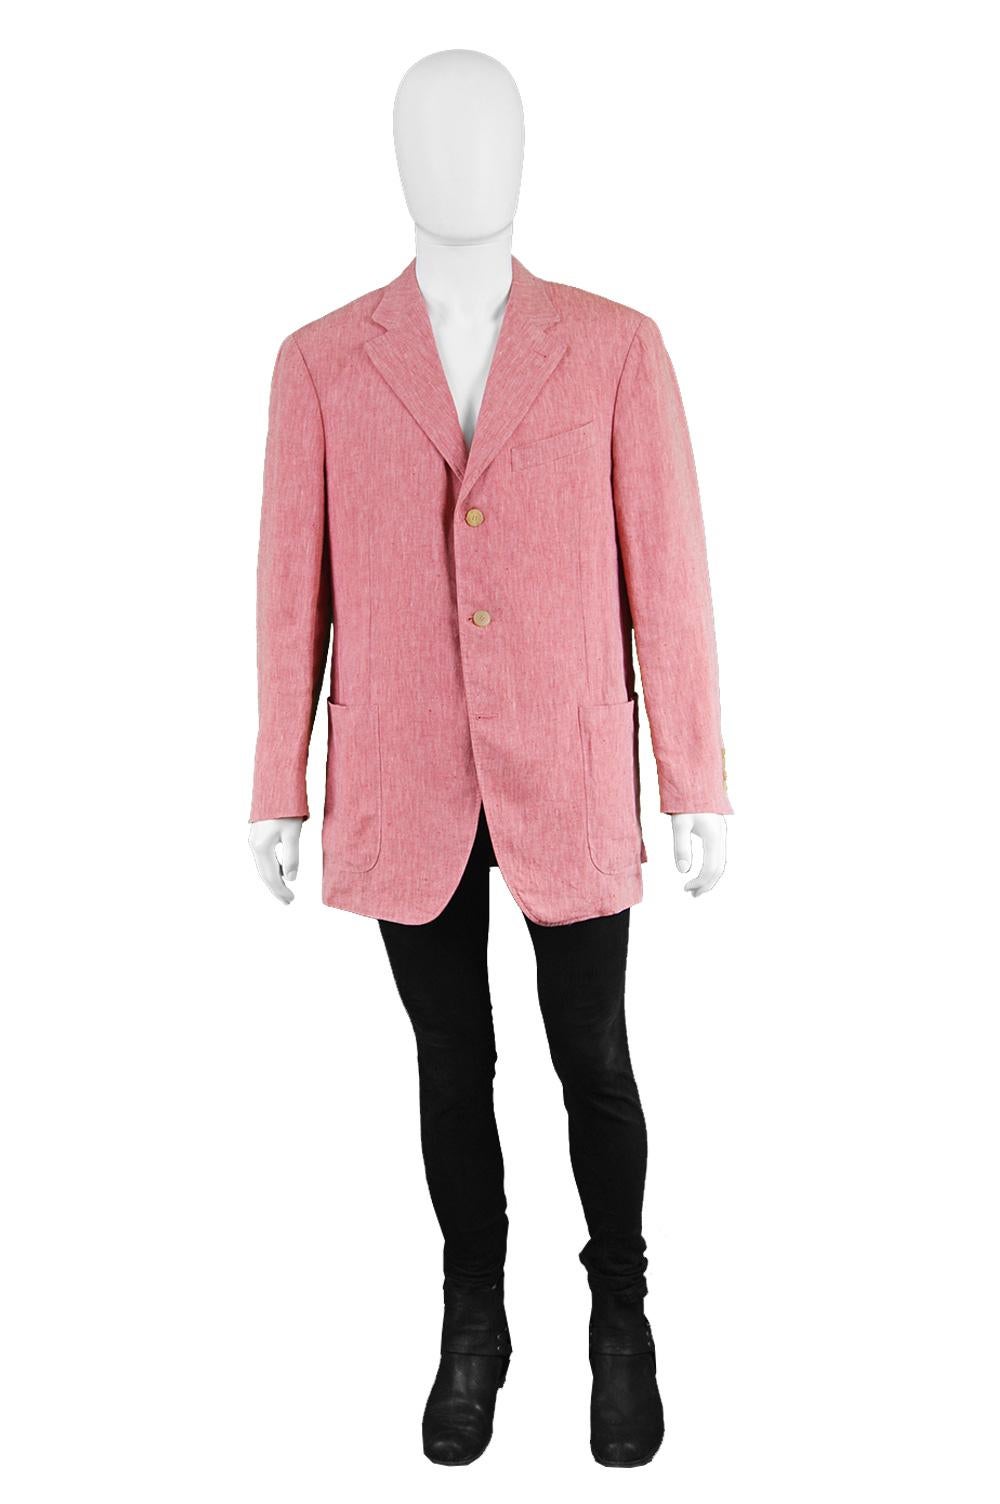 Canali for Holt Renfrew Men's Salmon Pink Linen Sport Coat Blazer Jacket 44R

Size: Marked 54R which is roughly a men's XL. Please check measurements 
Chest - 42” / 106cm
Waist - 42” / 106cm
Length (Shoulder to Hem) - 30” / 76cm
Shoulder to Shoulder